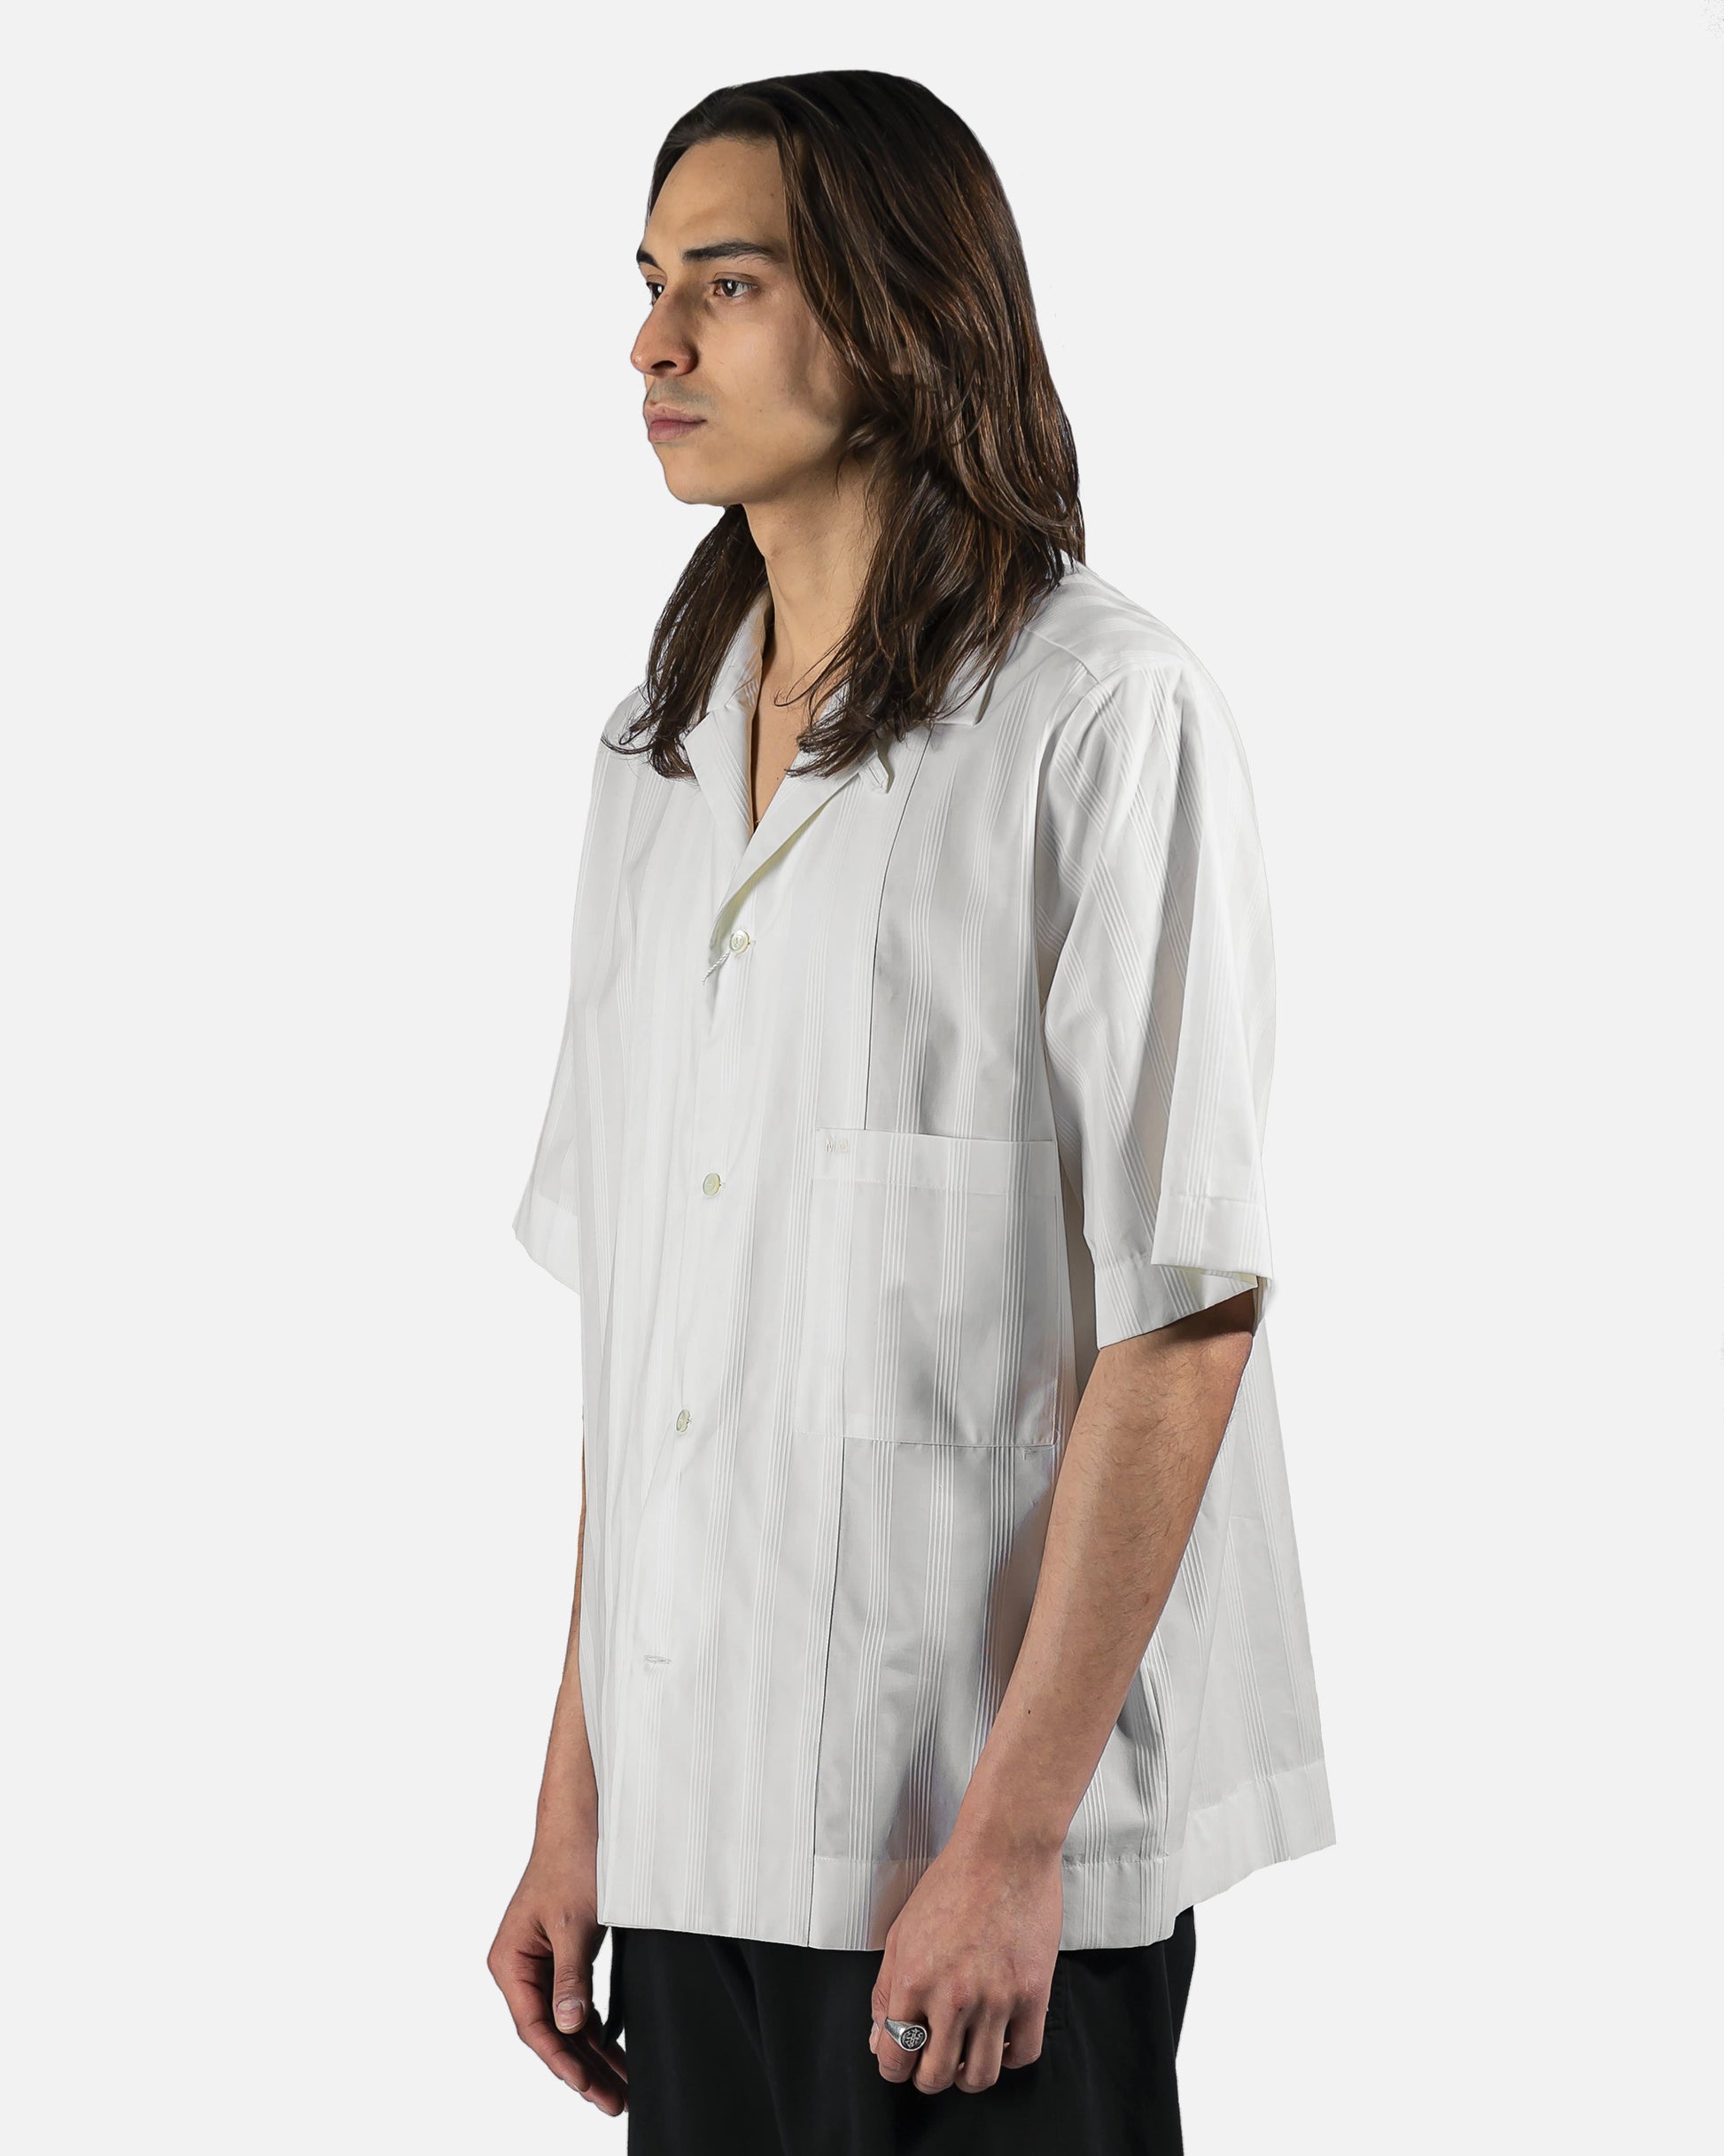 Maison Margiela Men's Shirts Cotton Striped Shirt in Off-White